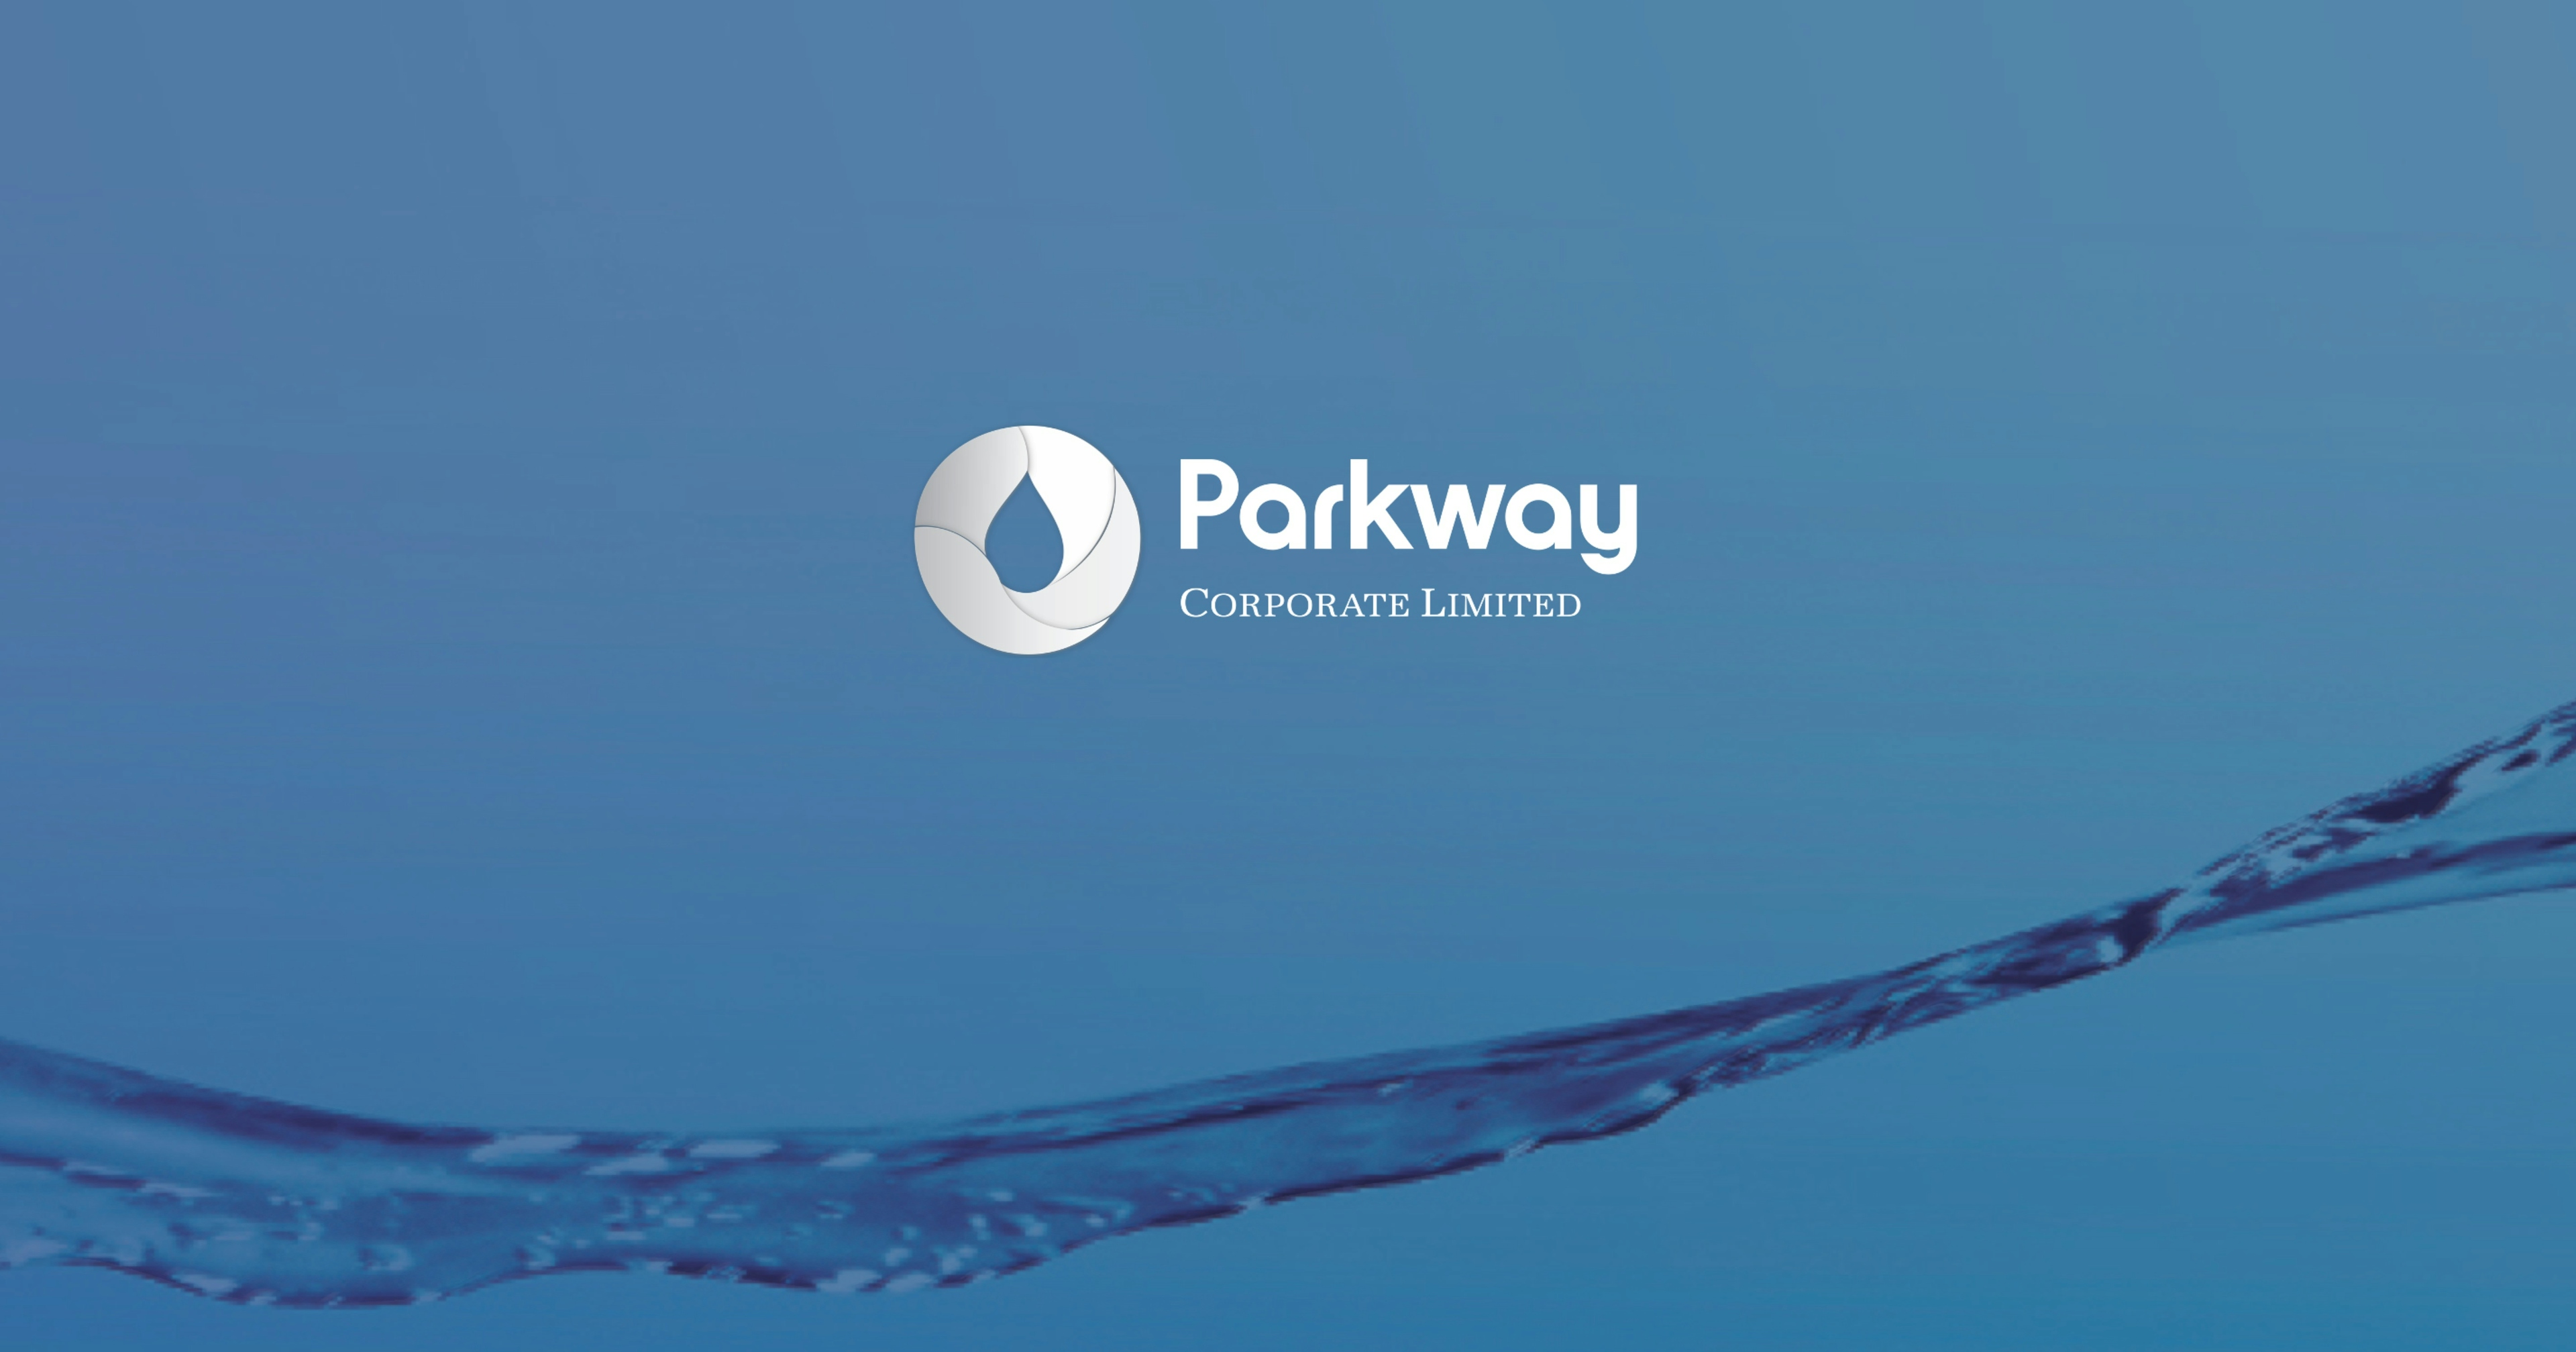 Parkway Corporate investor hub background image